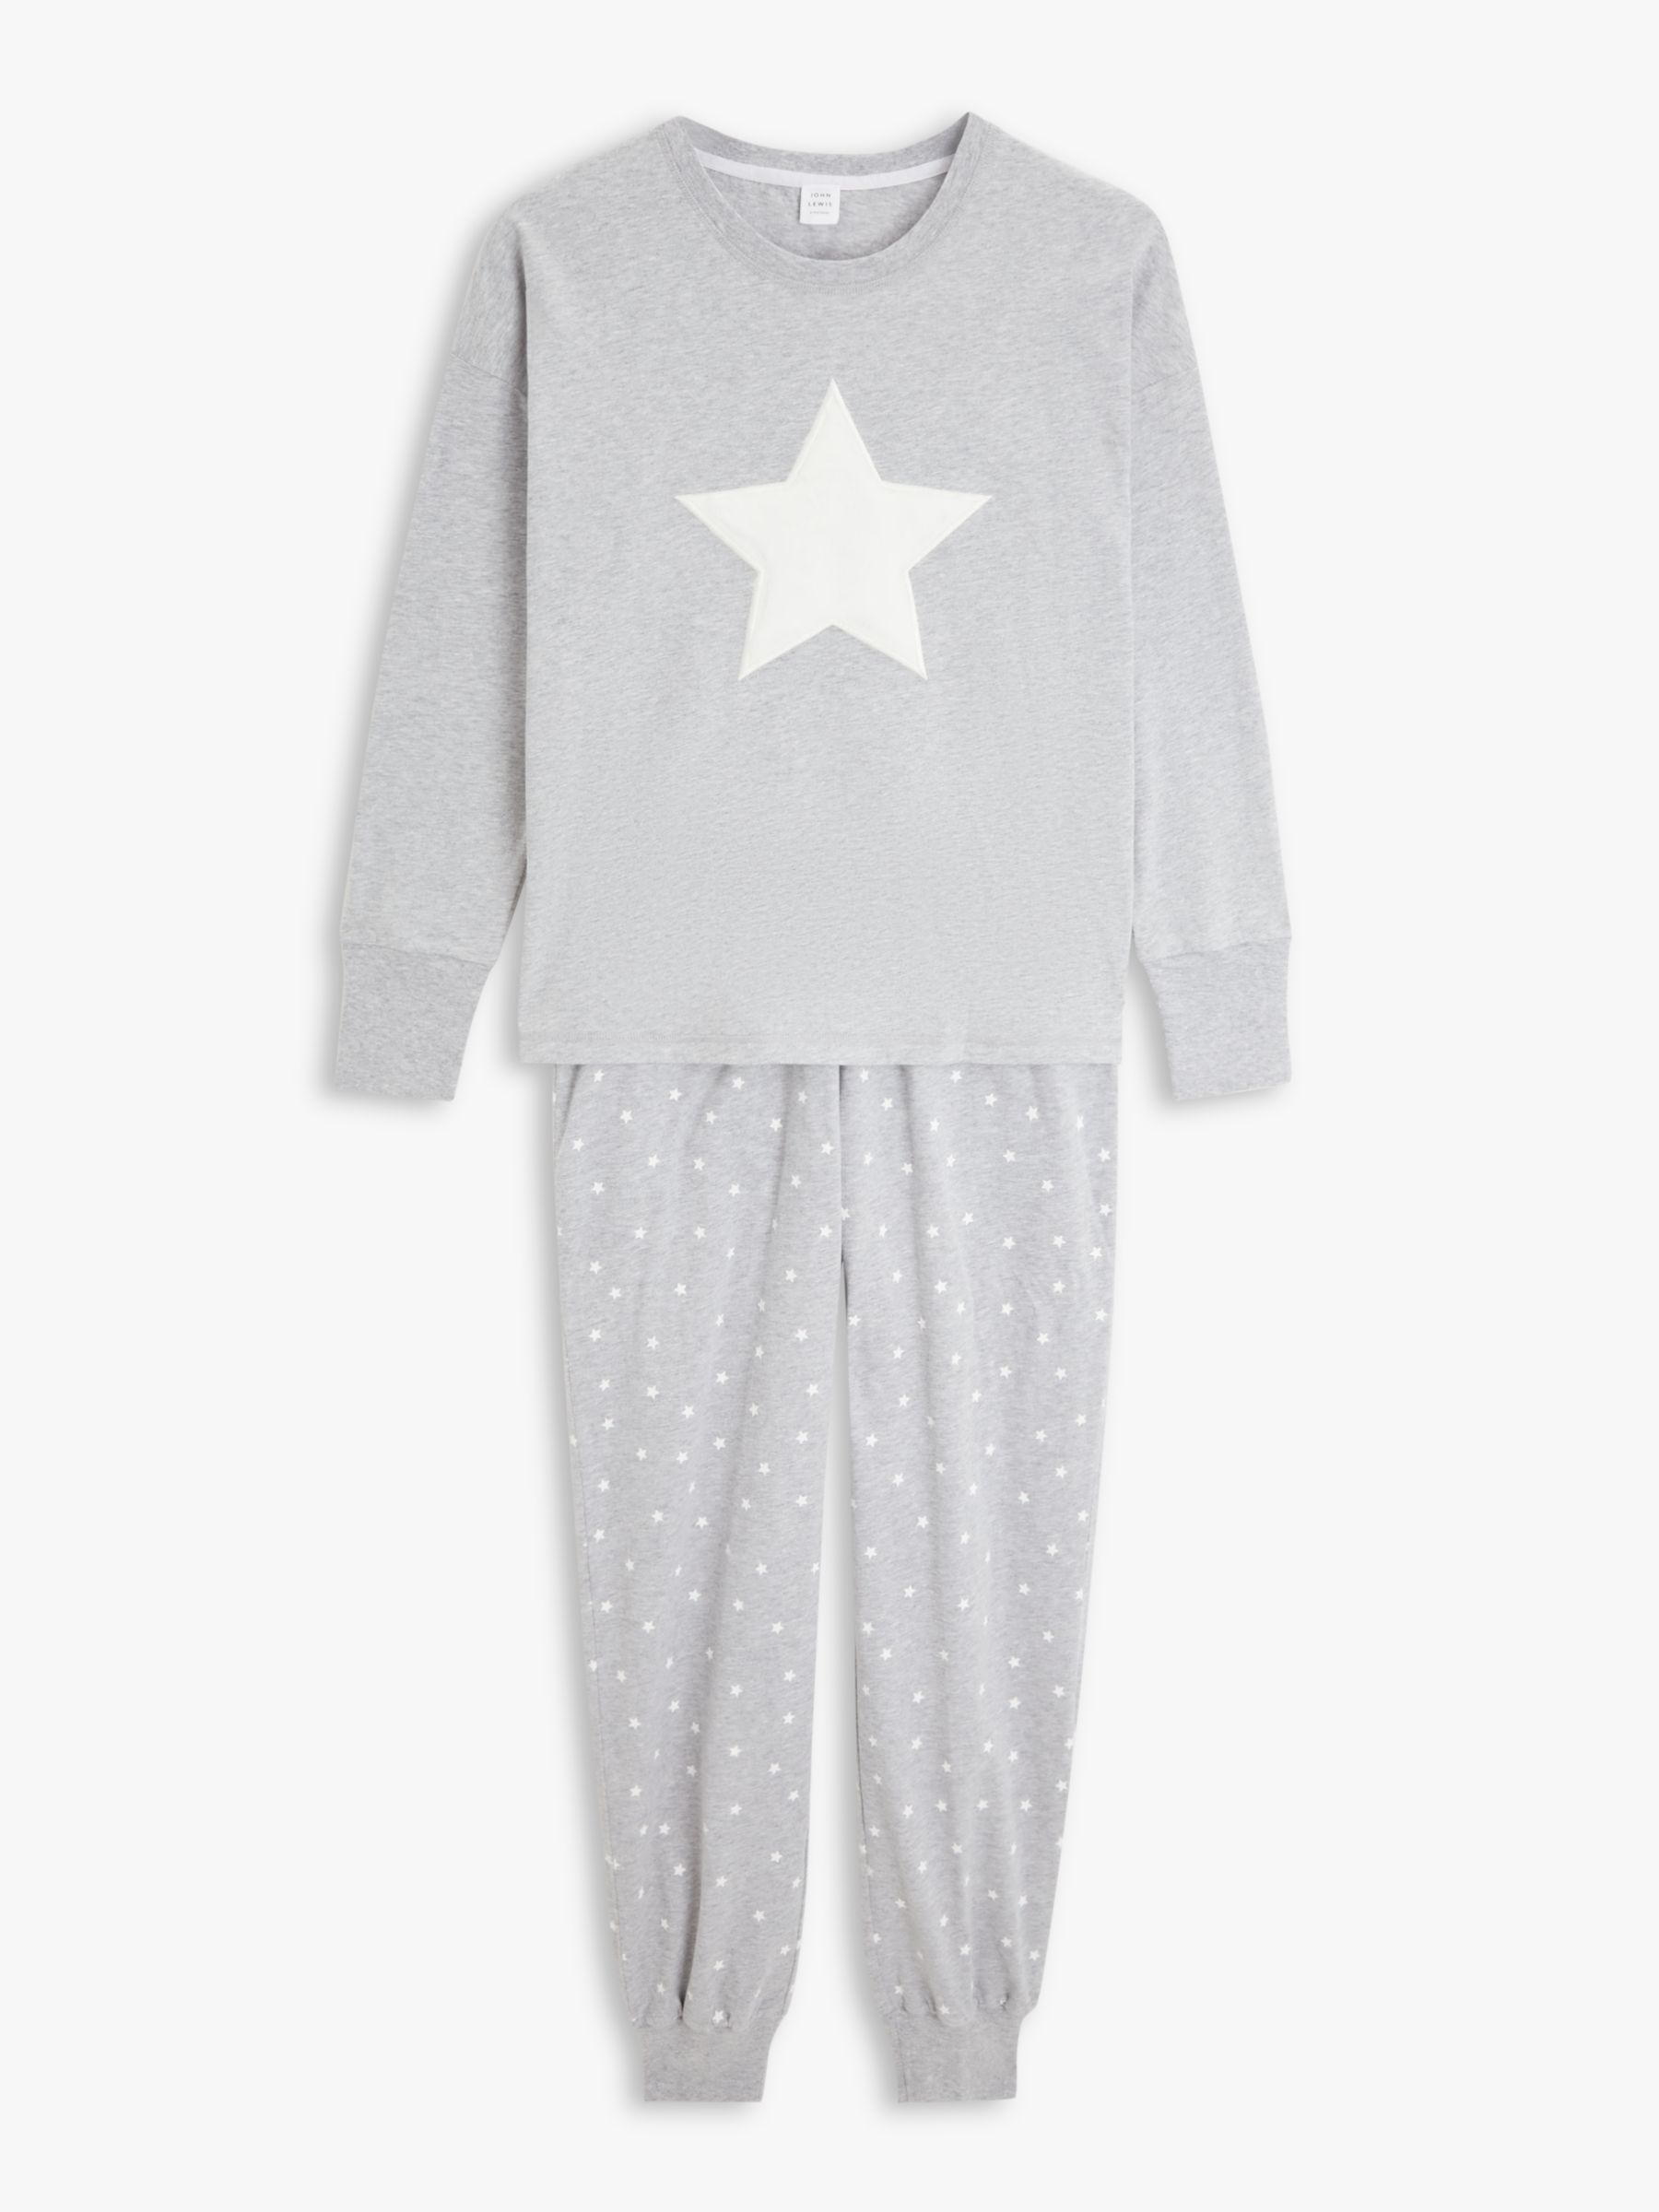 Buy John Lewis Furry Star Pyjama Set Online at johnlewis.com